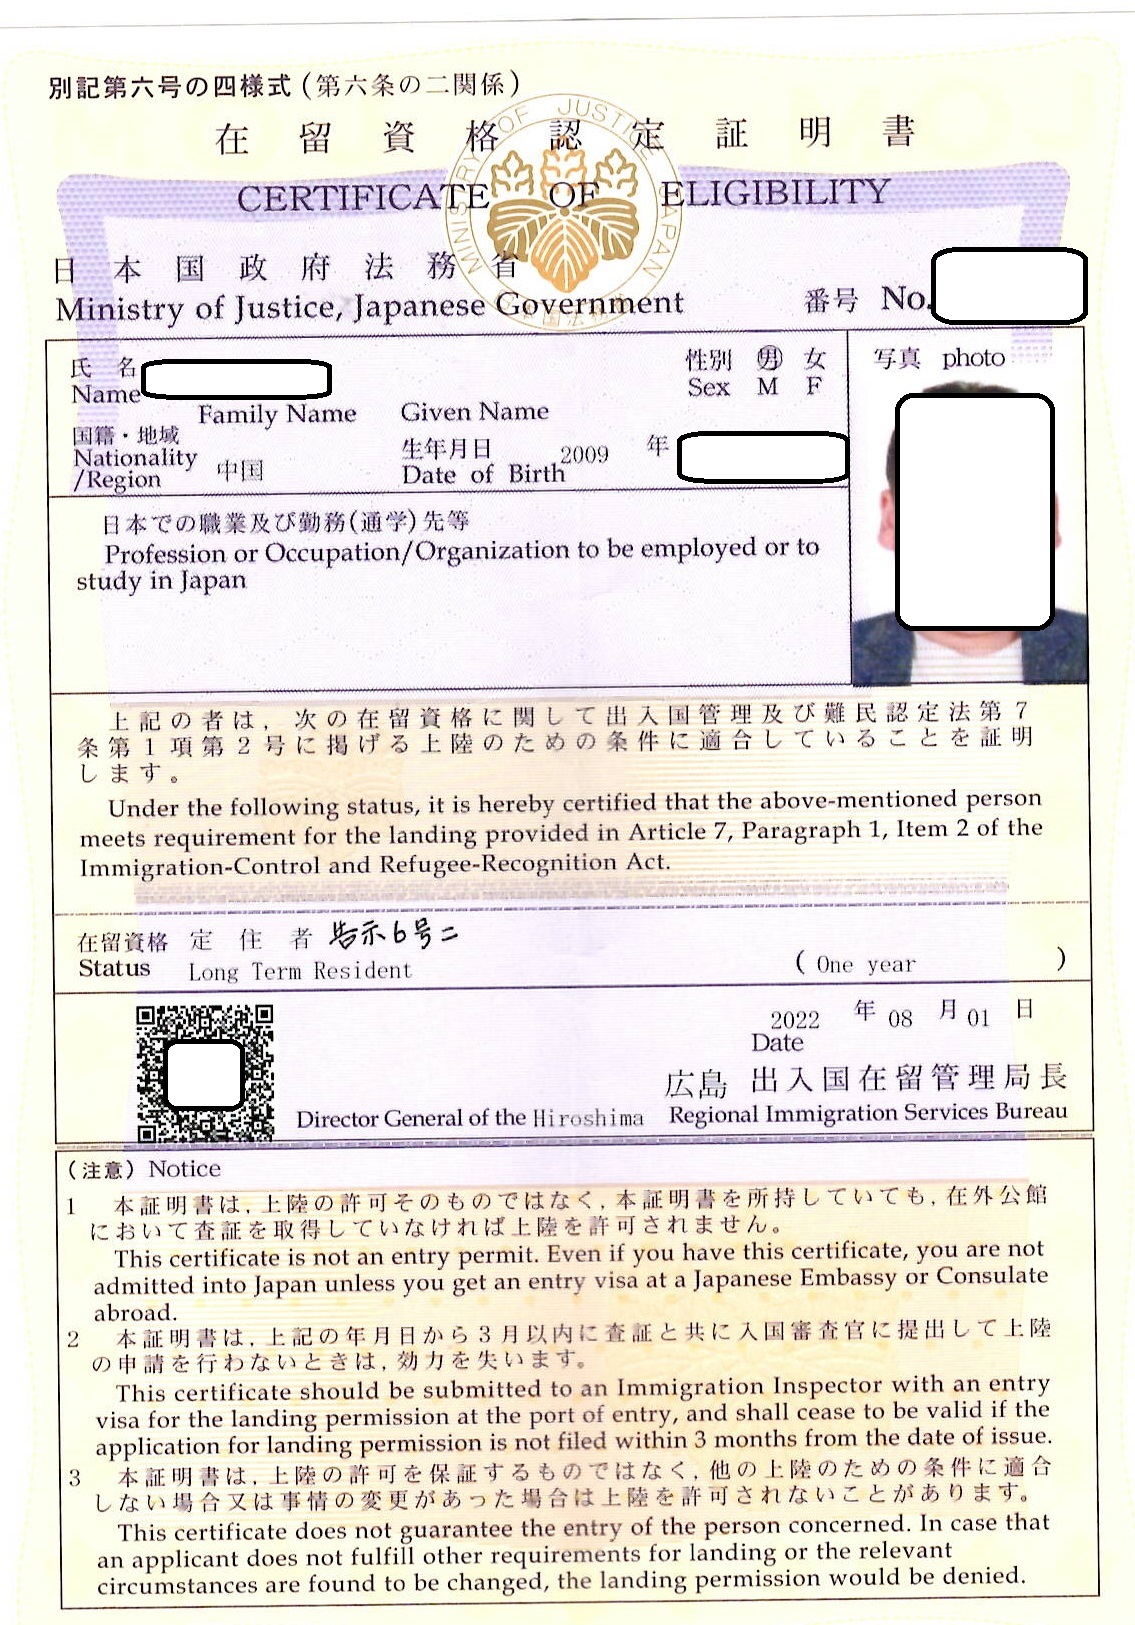 中国人「定住者告示6号ニ」の在留資格認定証明書を取得！